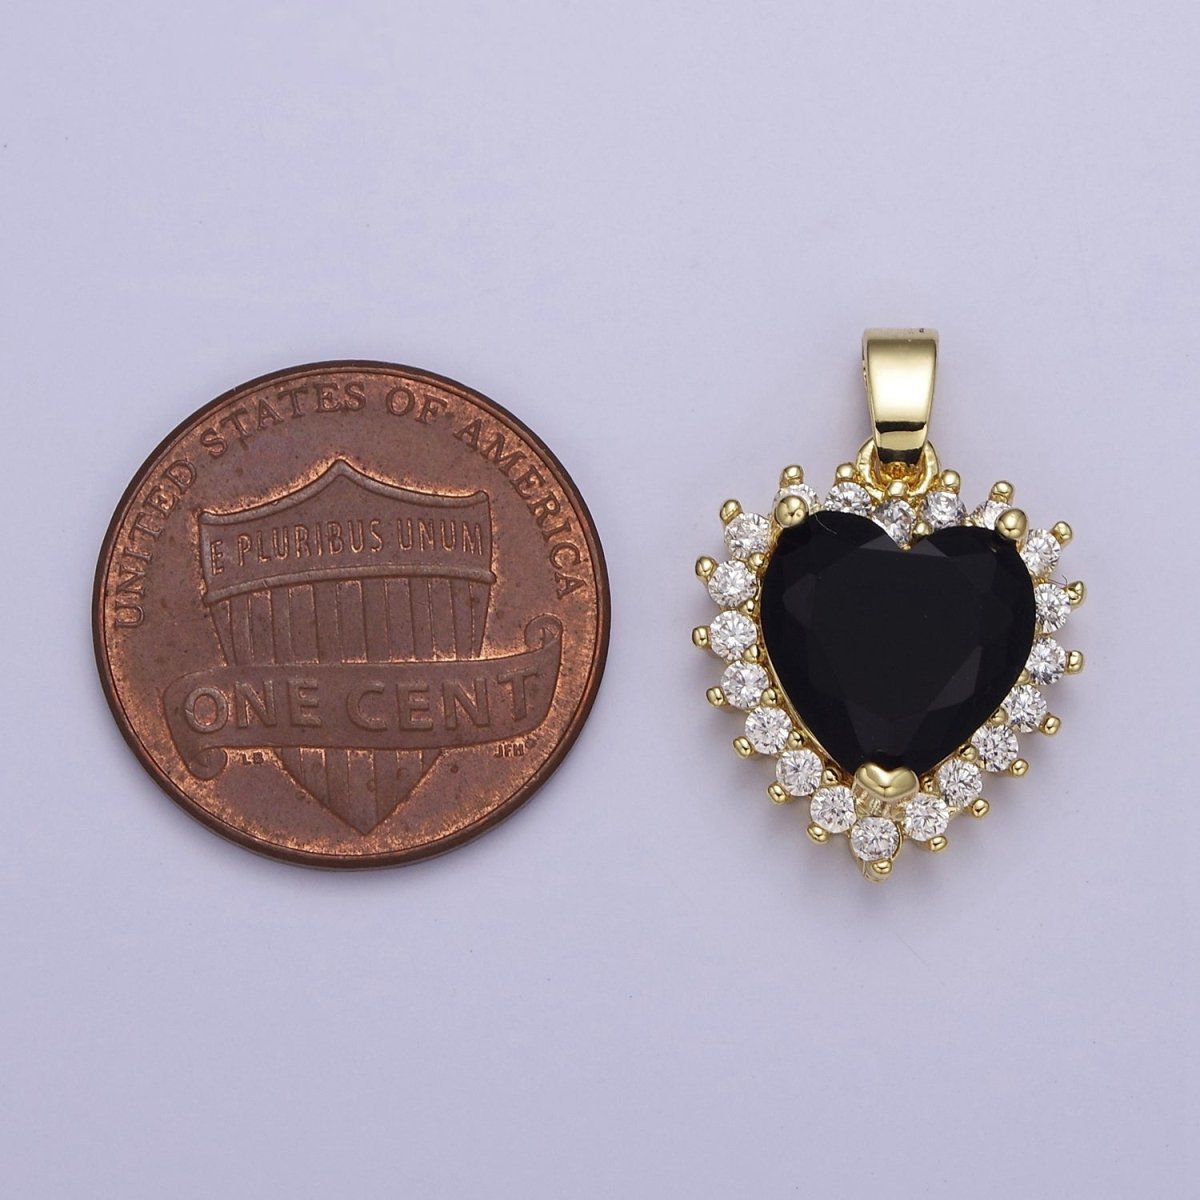 Micro Pave Heart CZ Pendant Charm For Jewelry Necklace Making, J-541 J-543 J-544 J-546 - DLUXCA